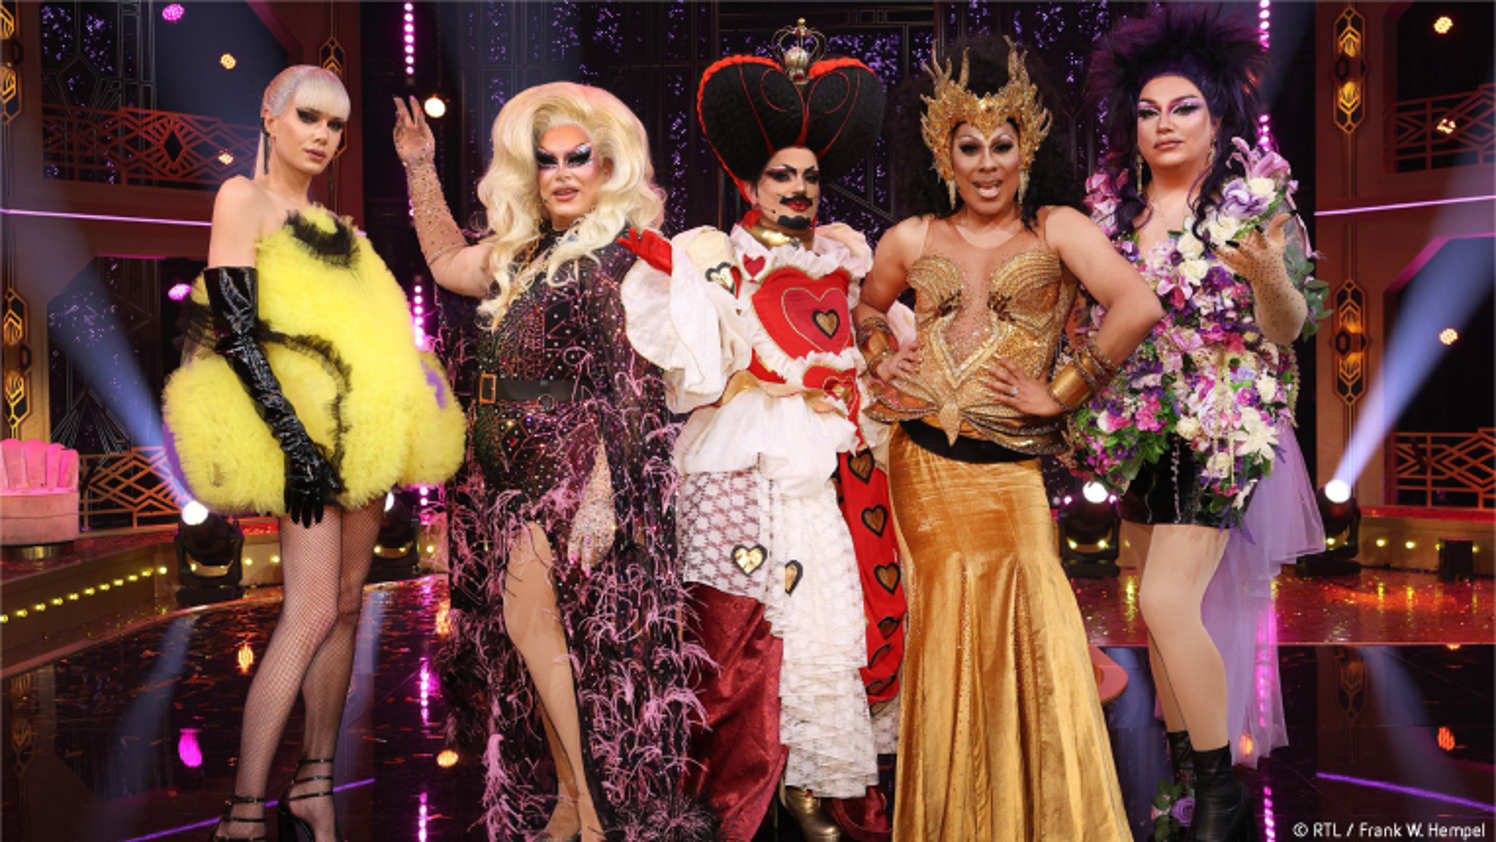 New installments of Viva la Diva - Who's the Drag Queen